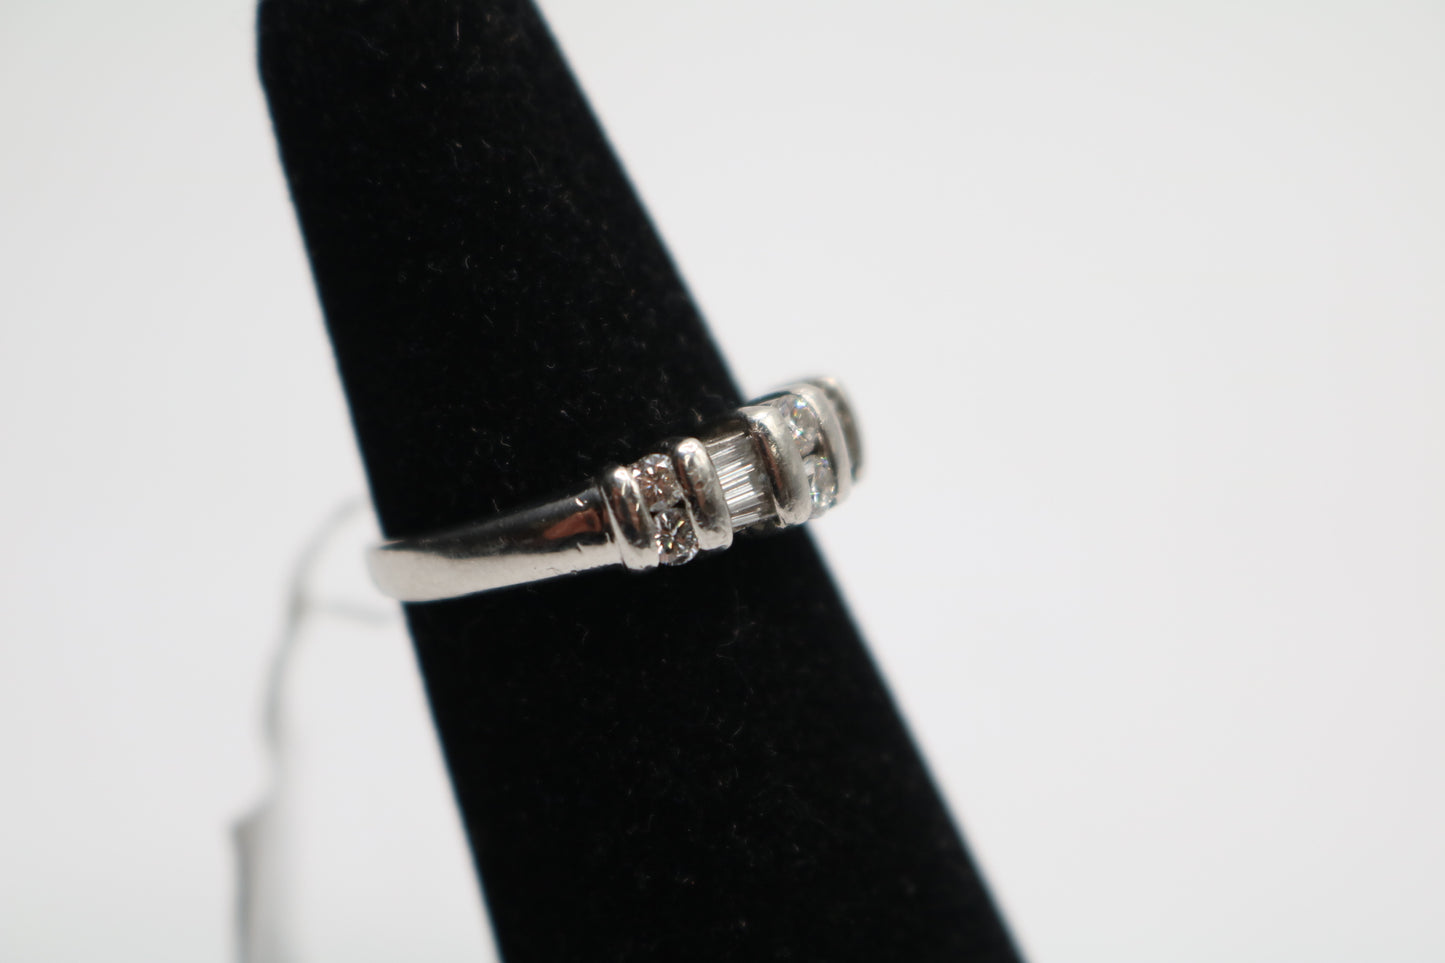 Platinum Diamond Band Ring (Size 6 1/2) CTW 0.48